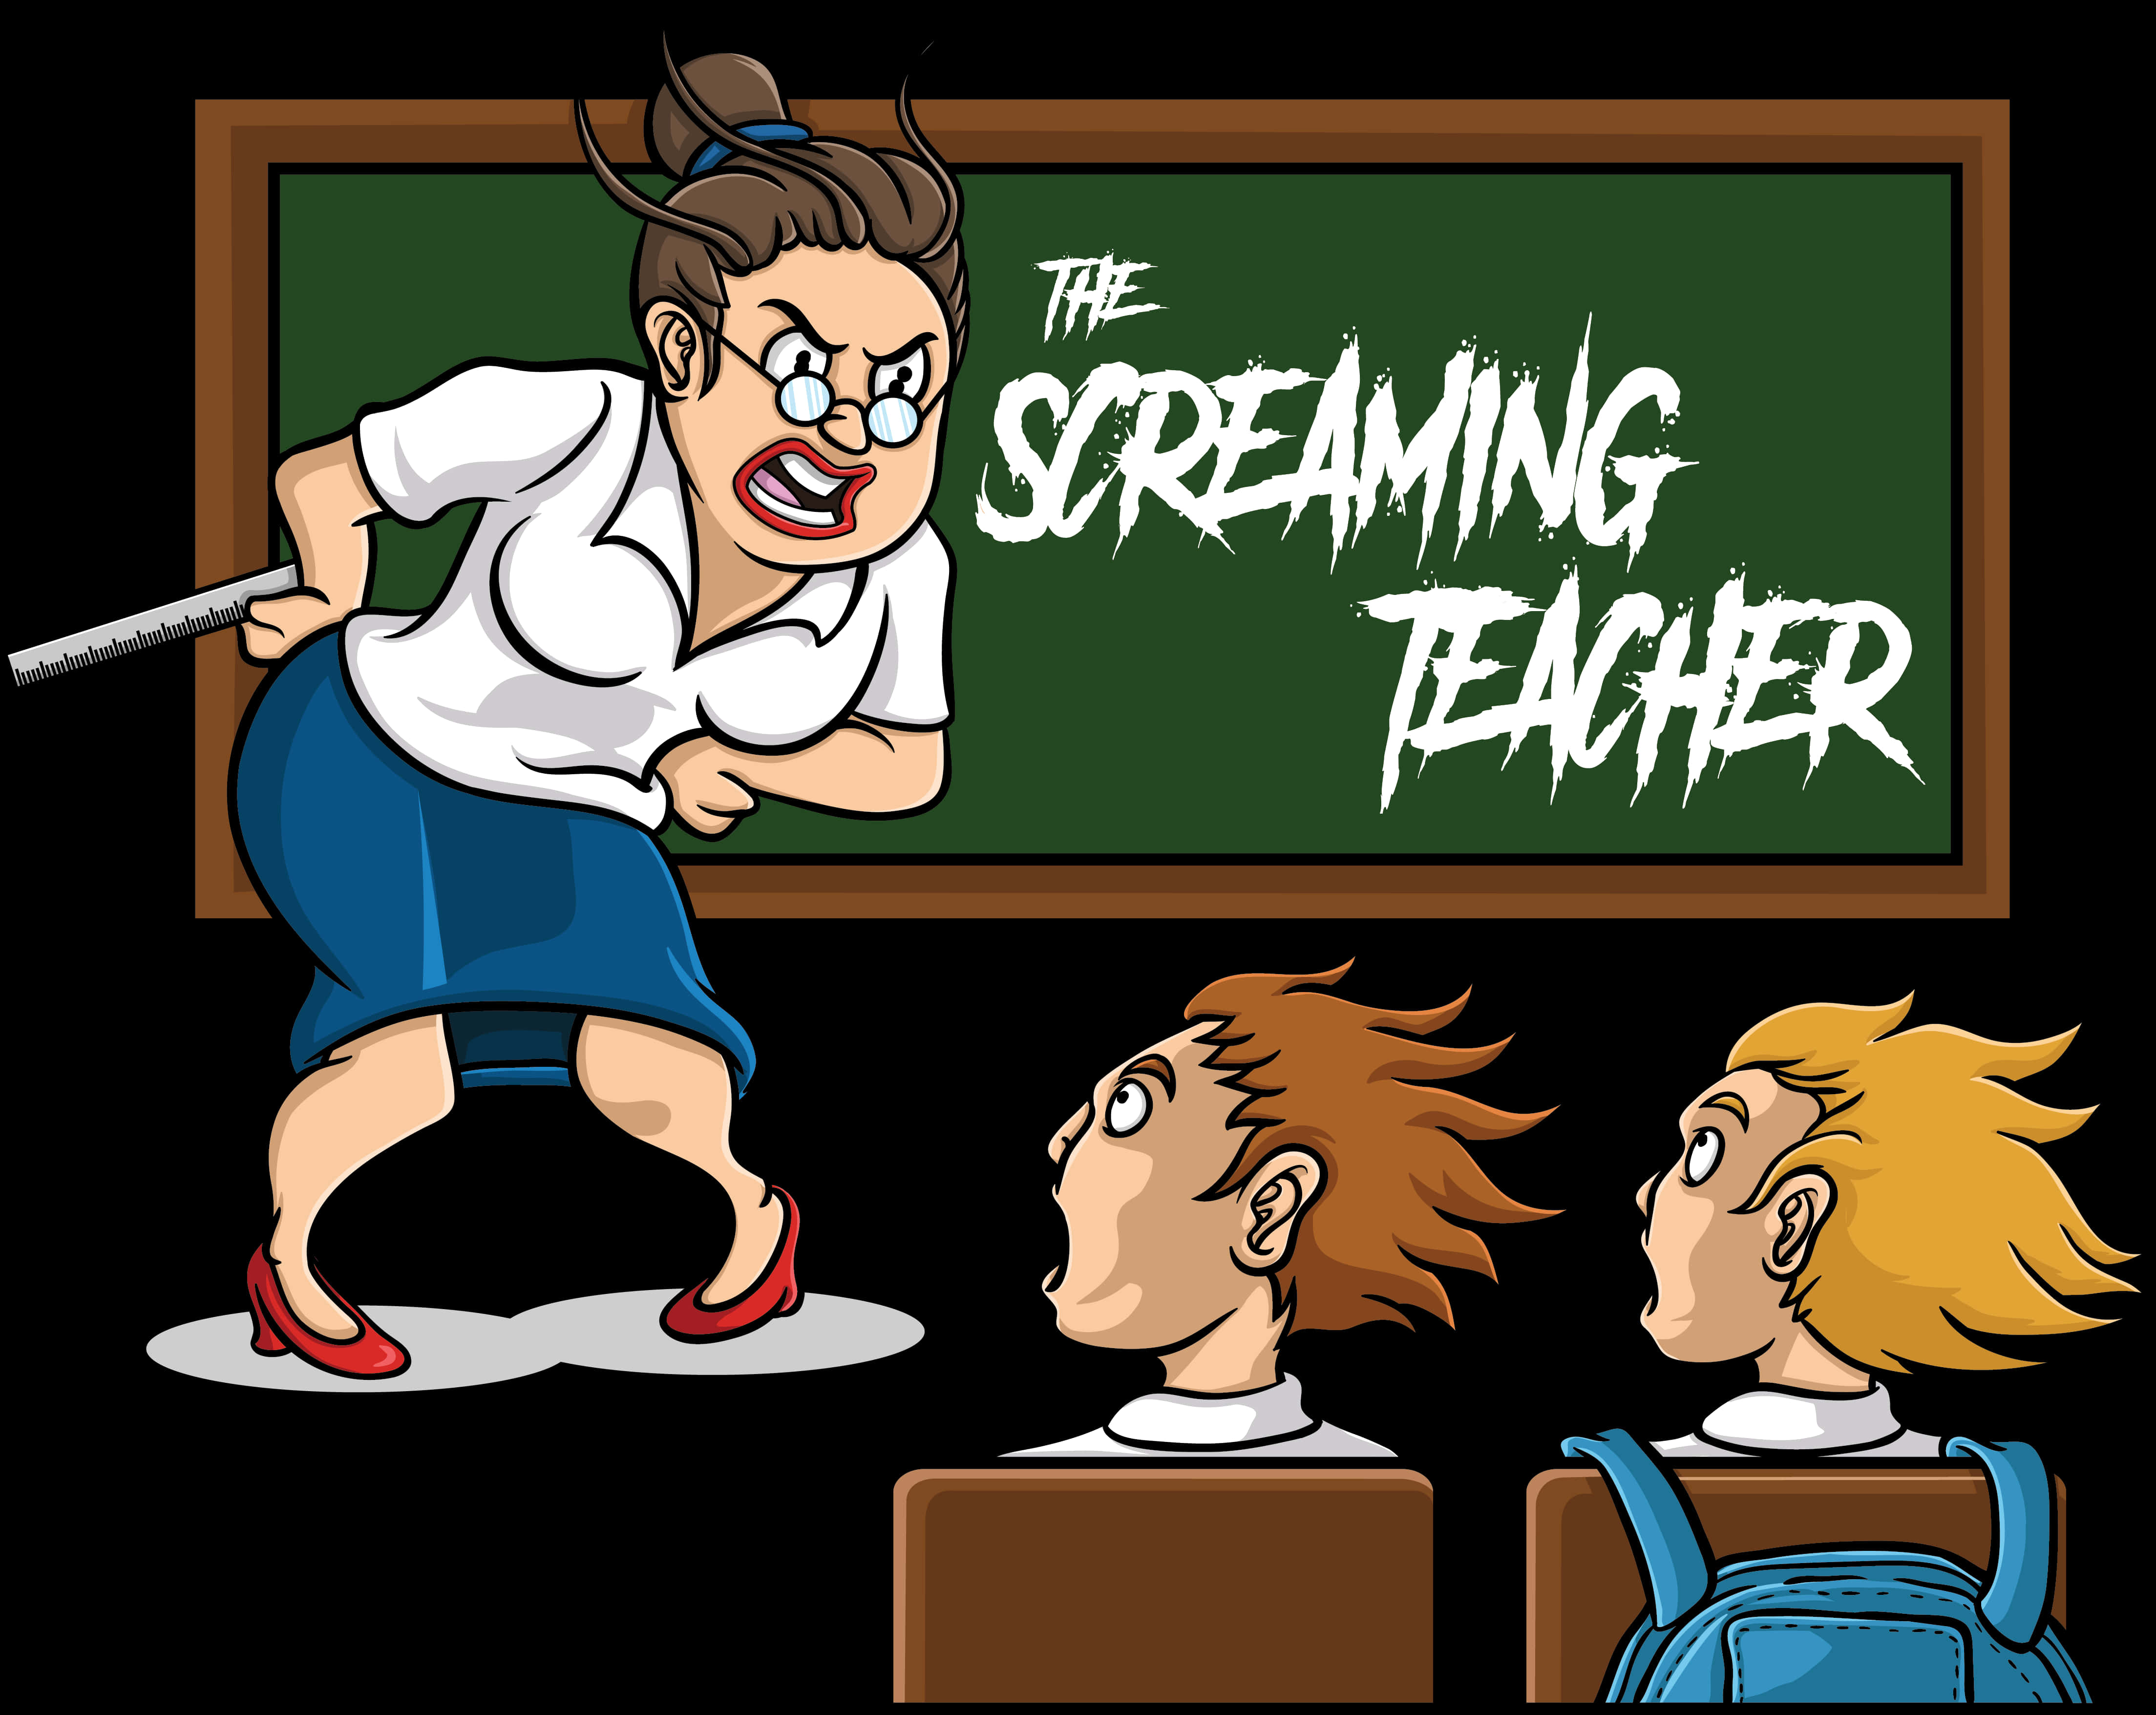 The Screaming Teacher Cartoon PNG image